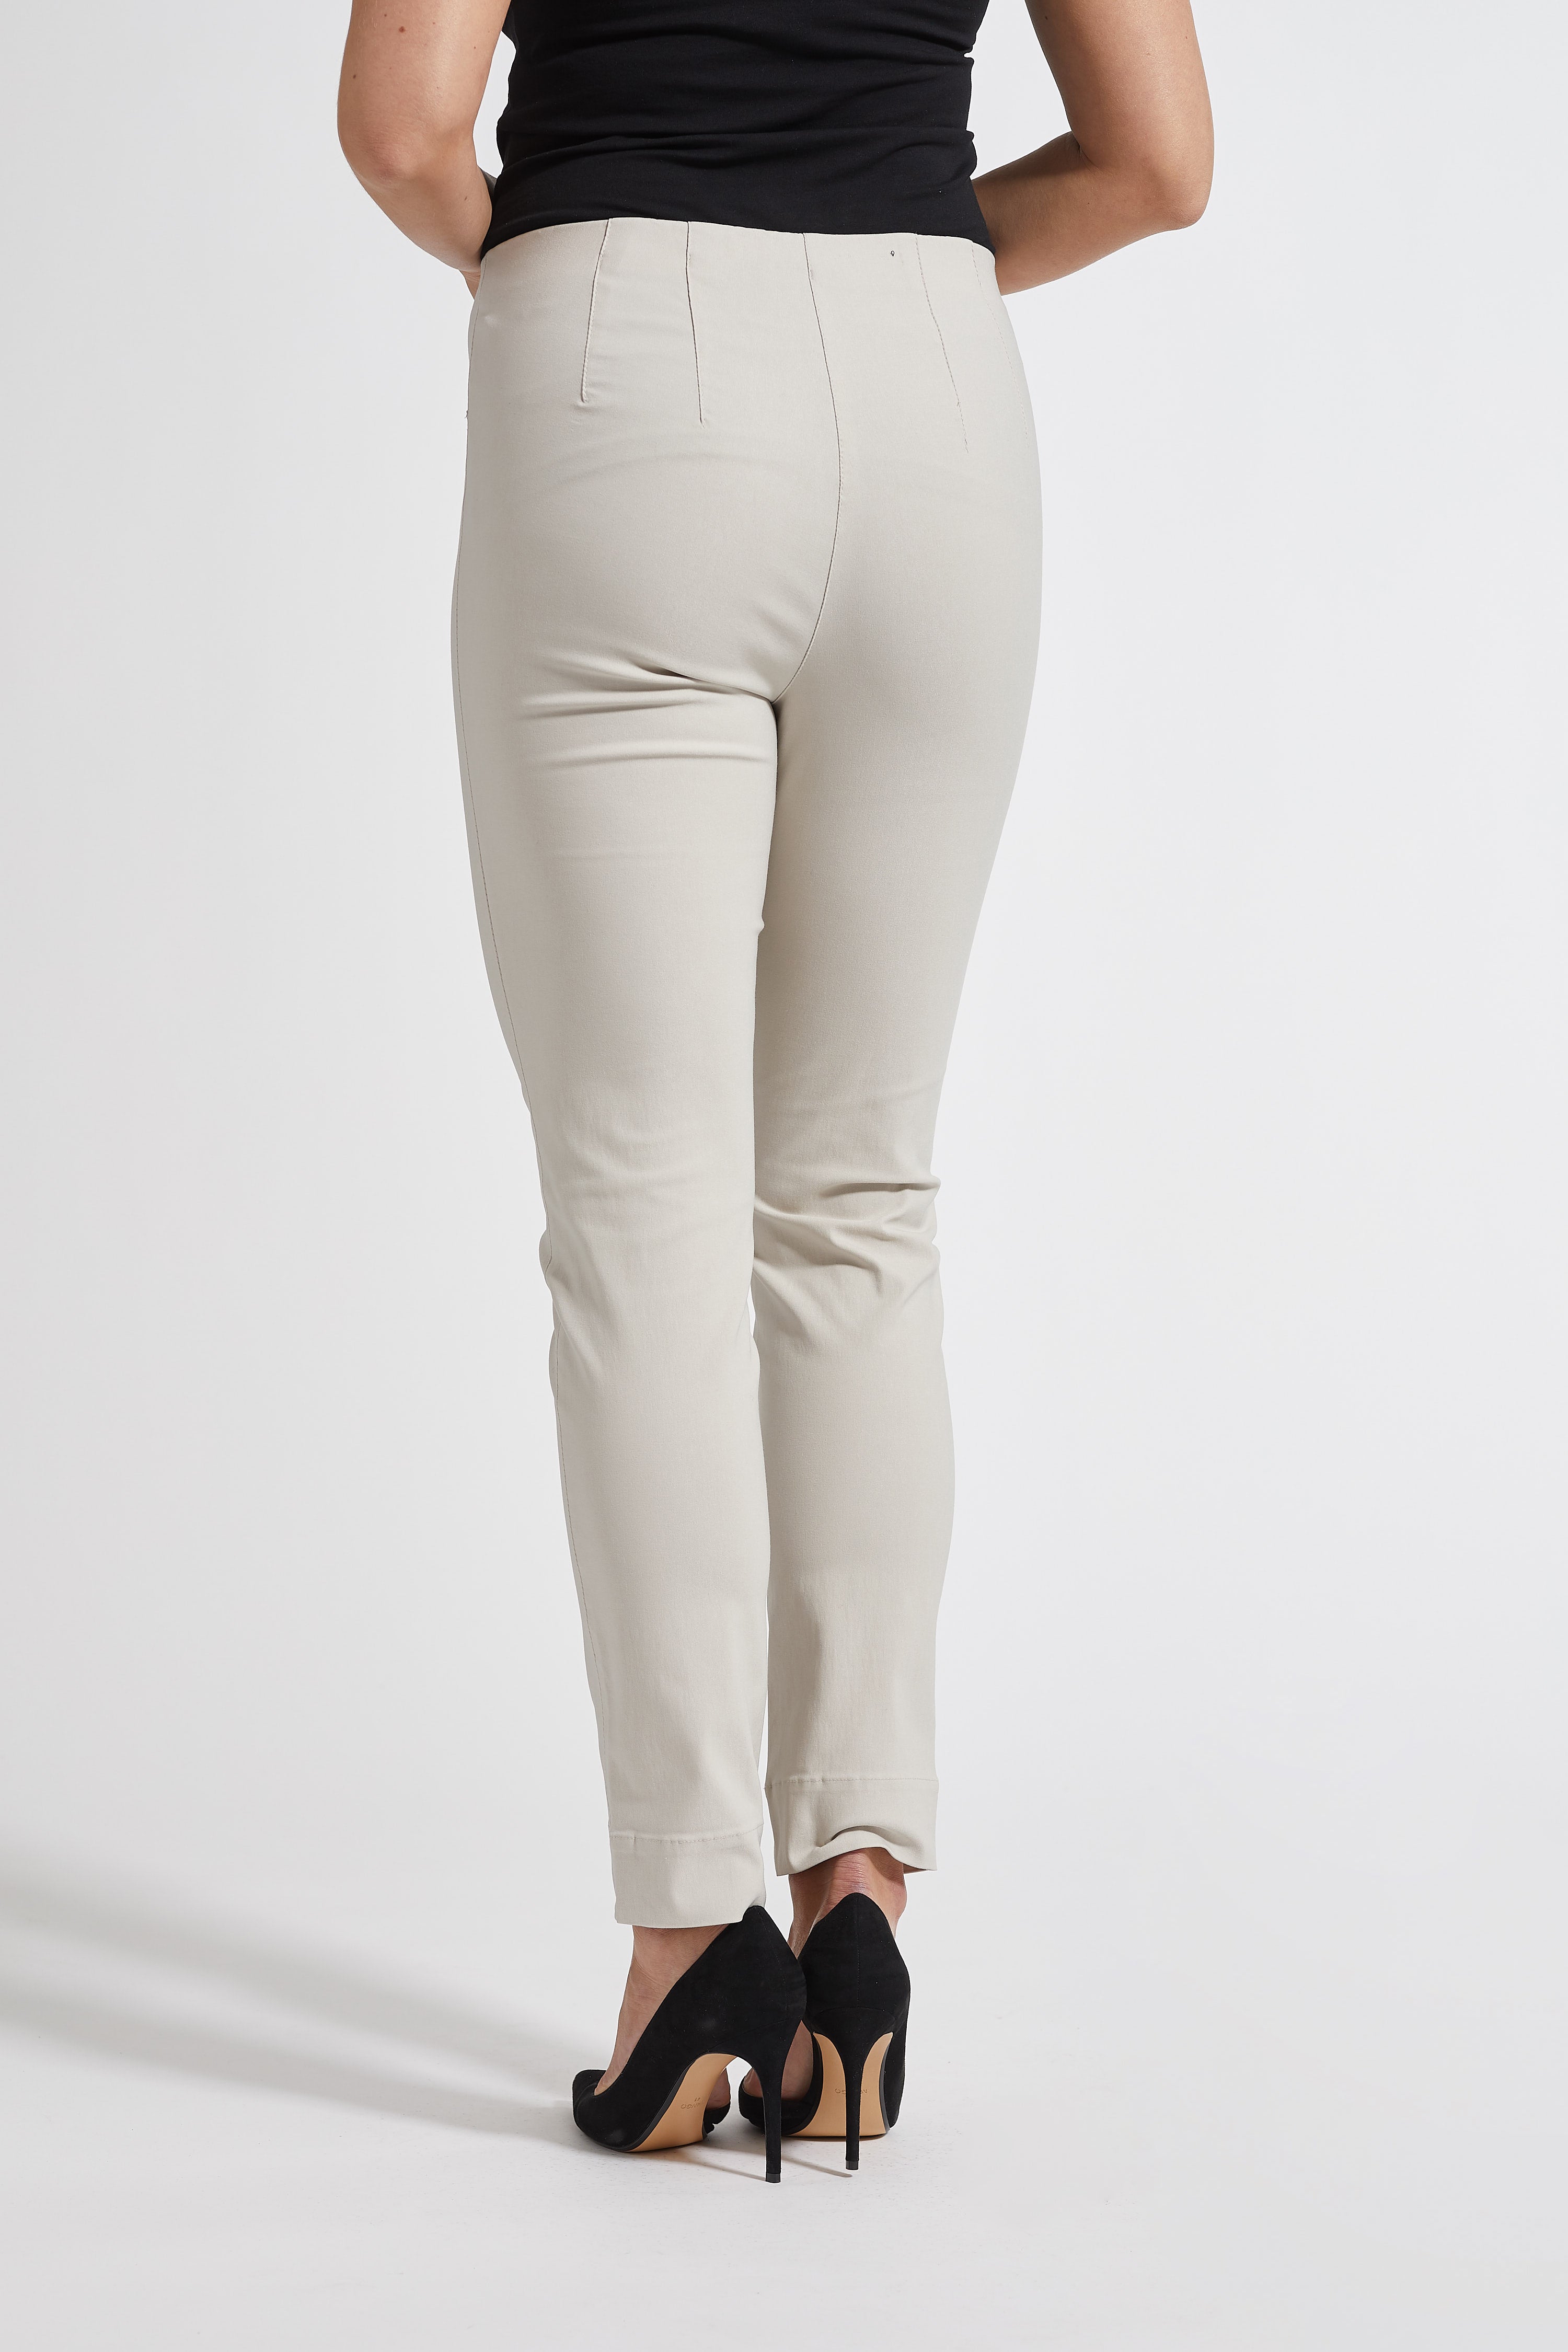 LAURIE  Vicky Slim - Short Length Trousers SLIM Grau sand